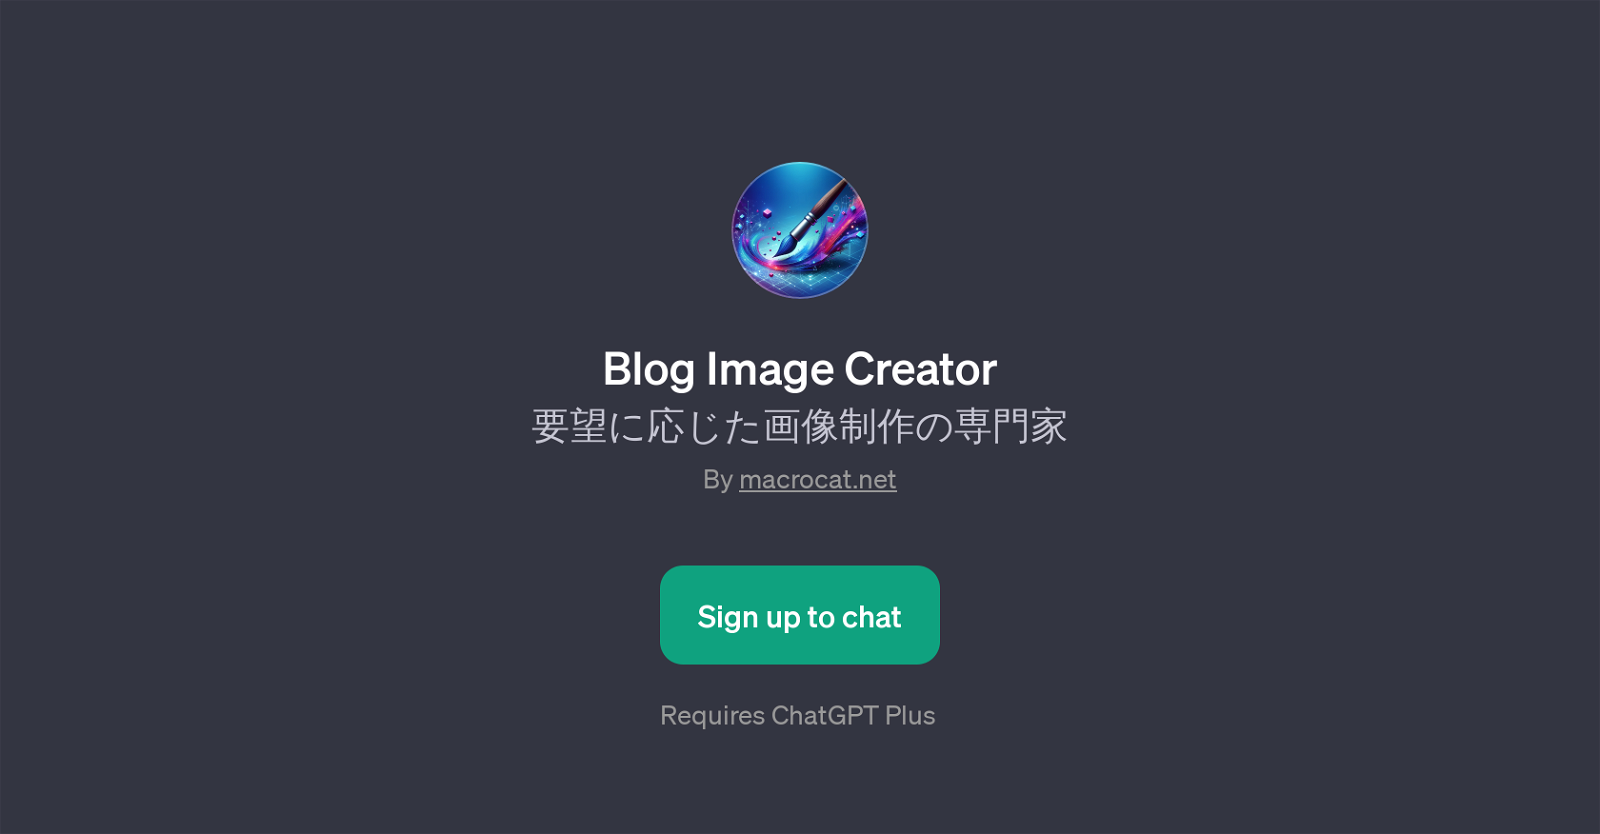 Blog Image Creator website